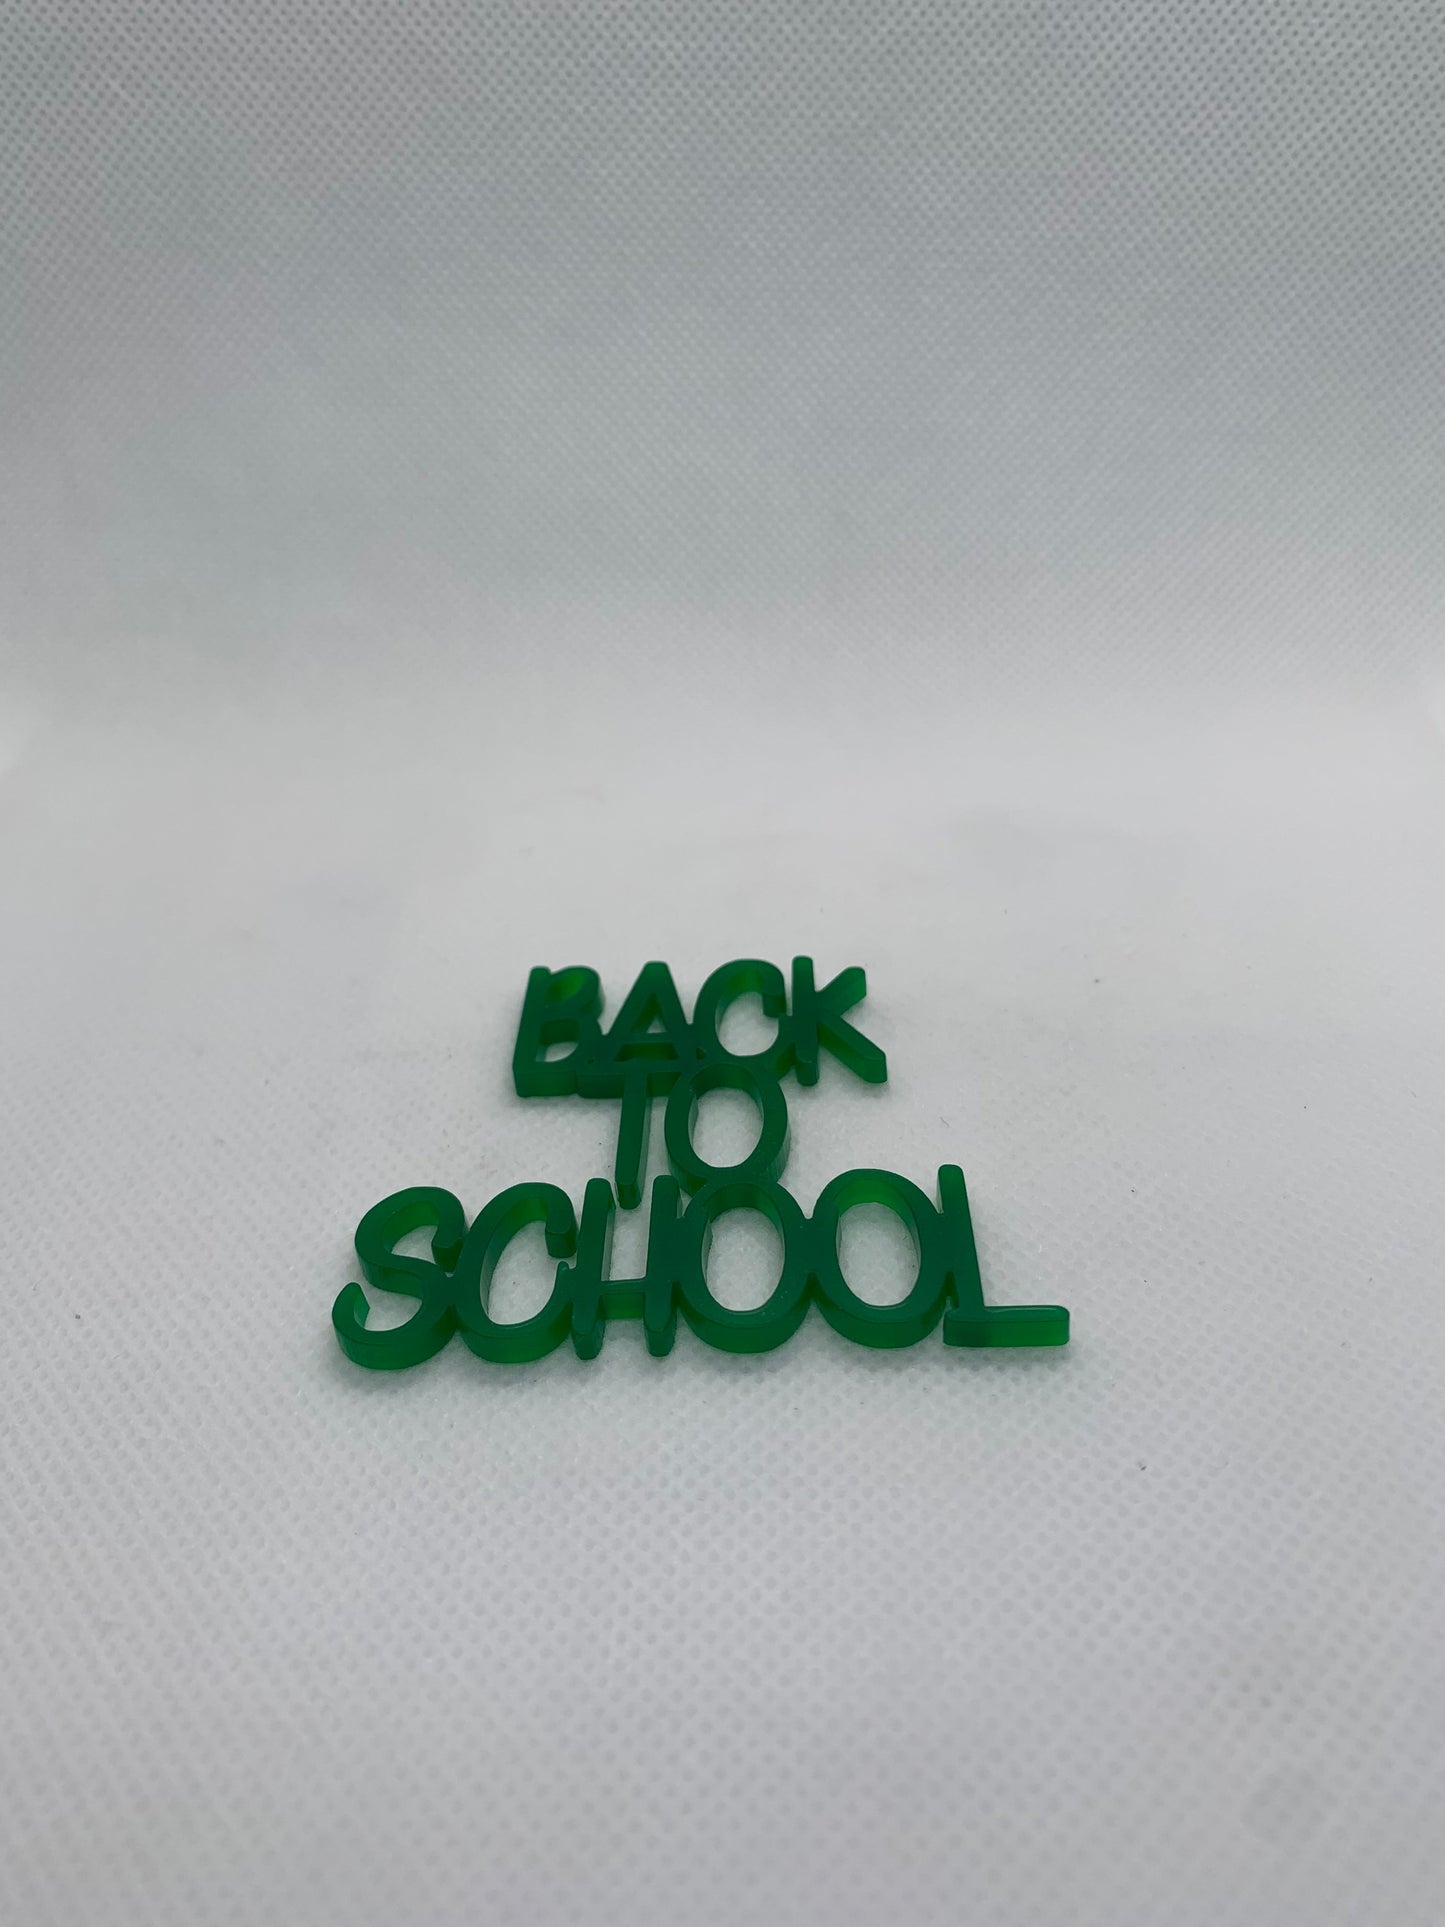 Back to school - Green - Creative Designs By Kari